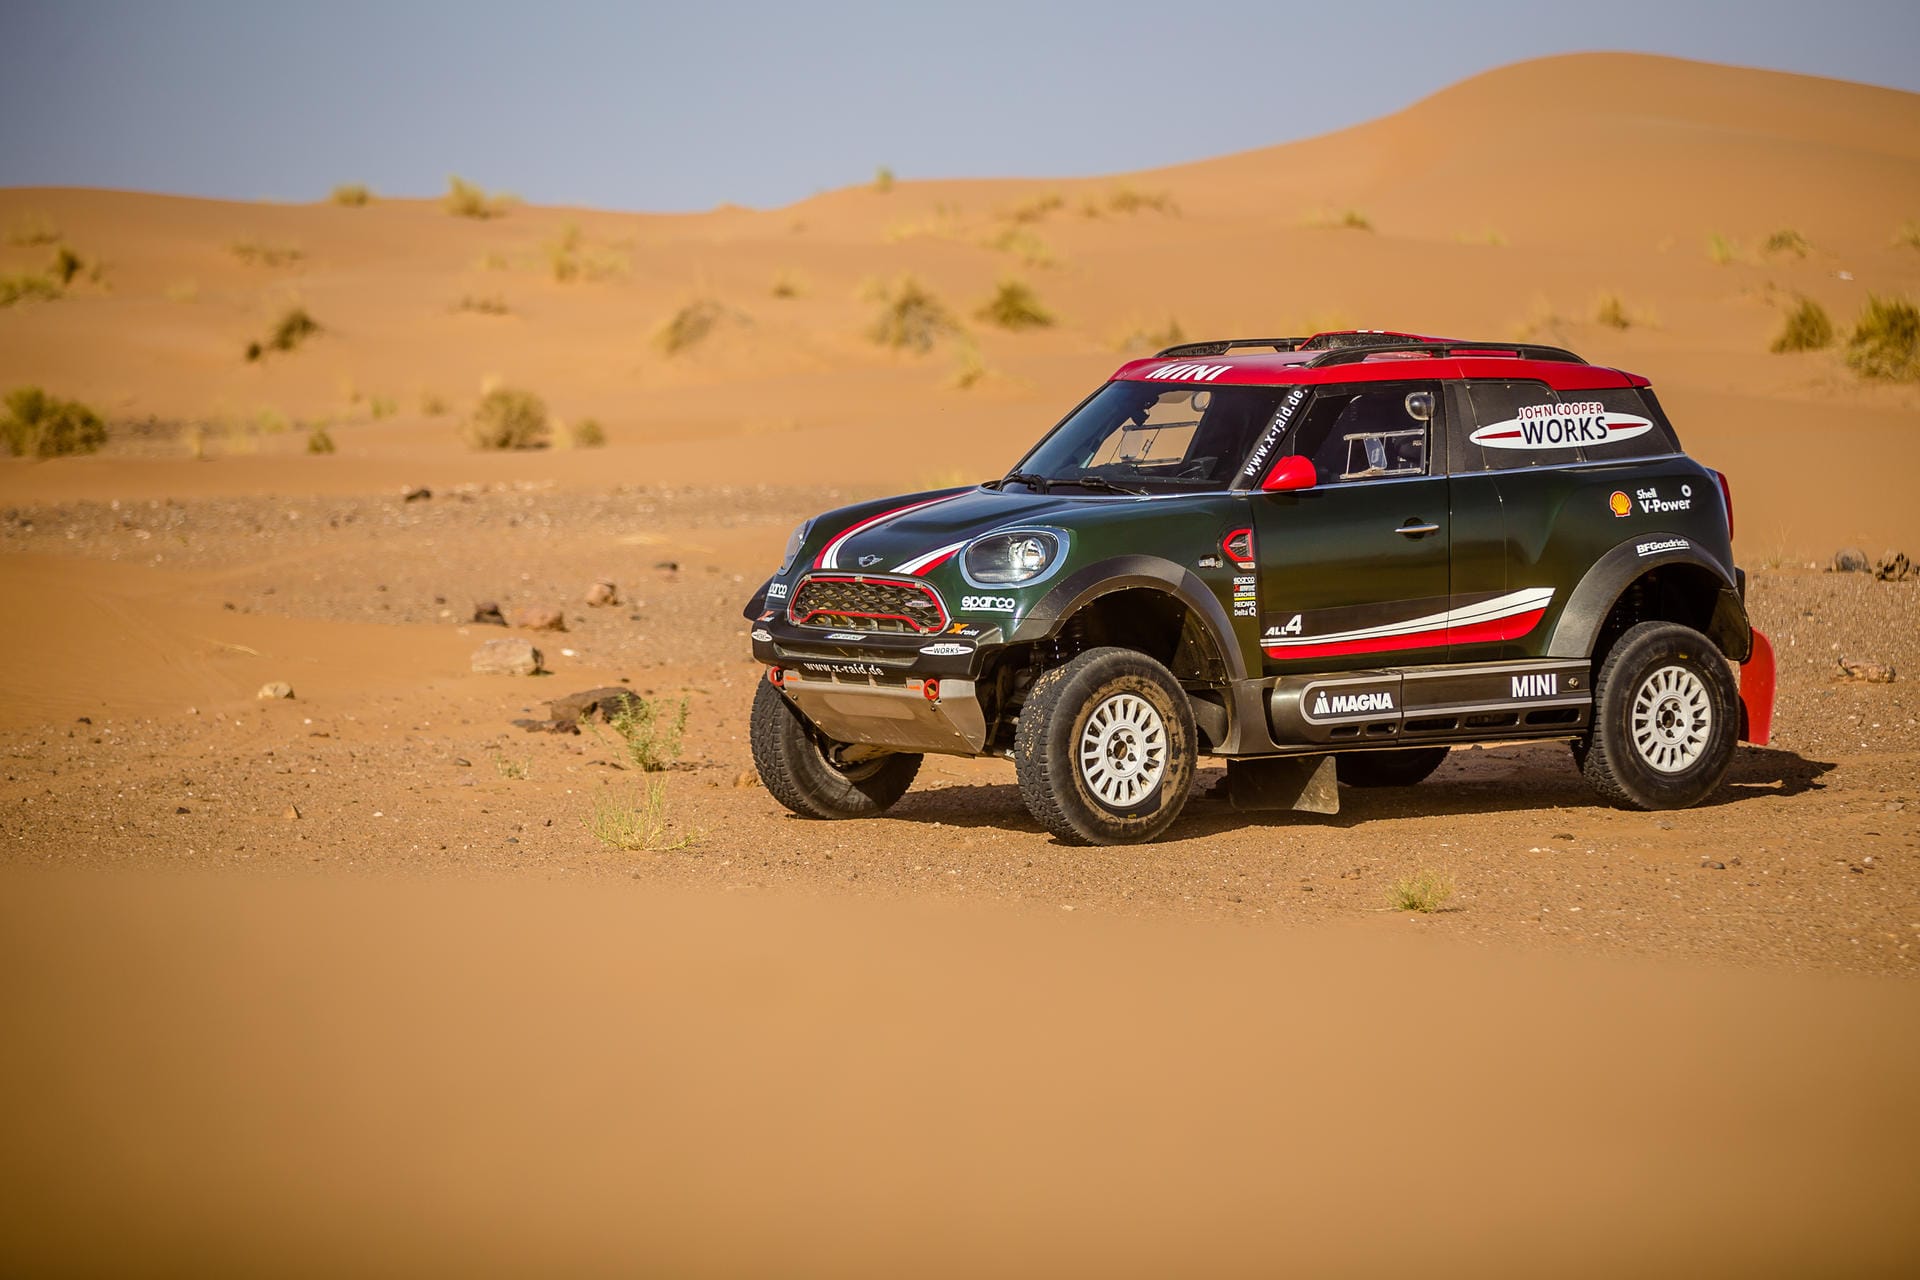 Insgesamt nehmen sieben Fahrzeuge des X-raid Teams an der Rallye Dakar teil, darunter vier Mini John Cooper Works Rally.